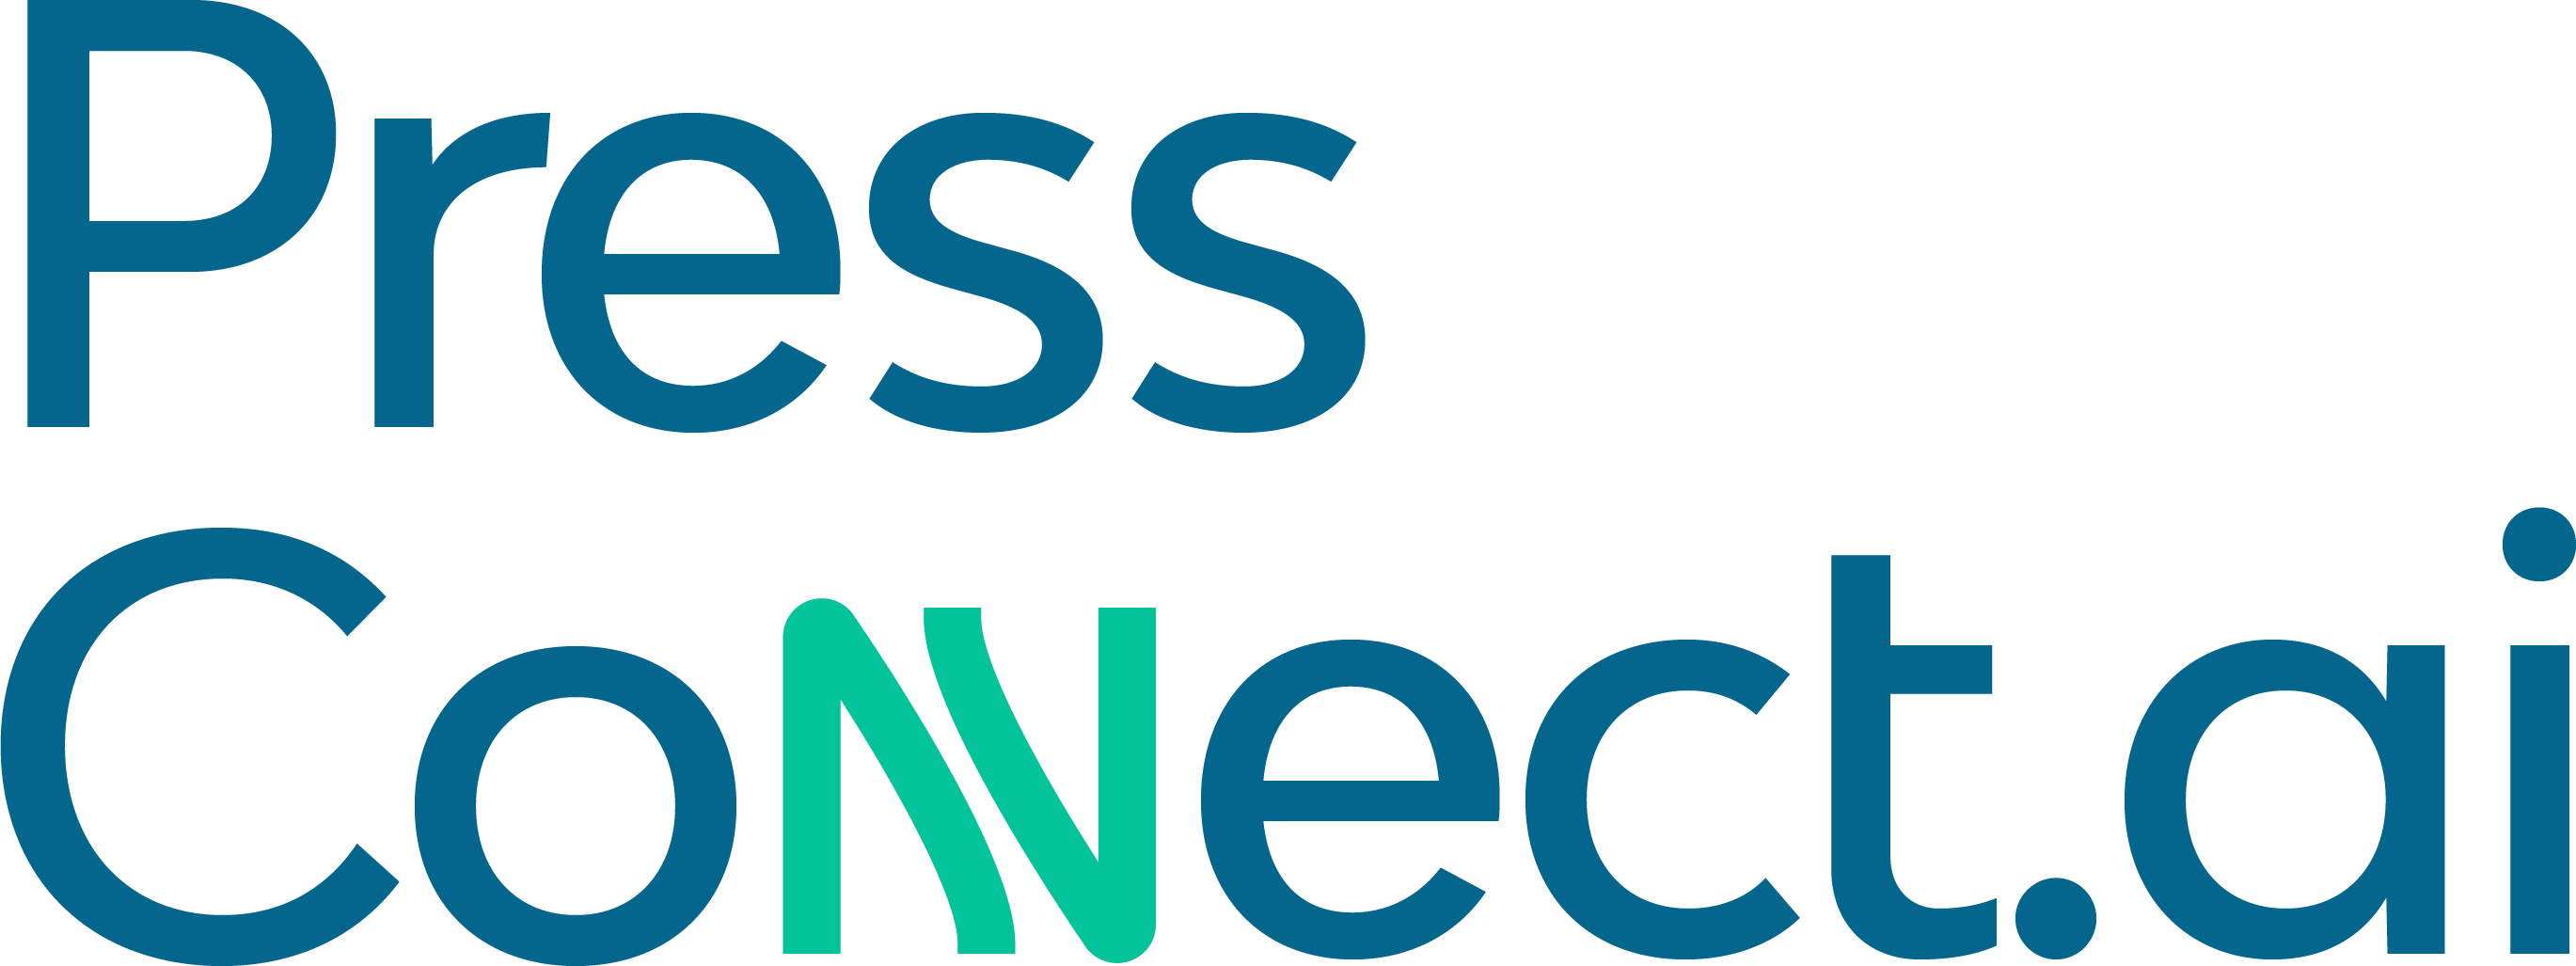 Press Connect Logo